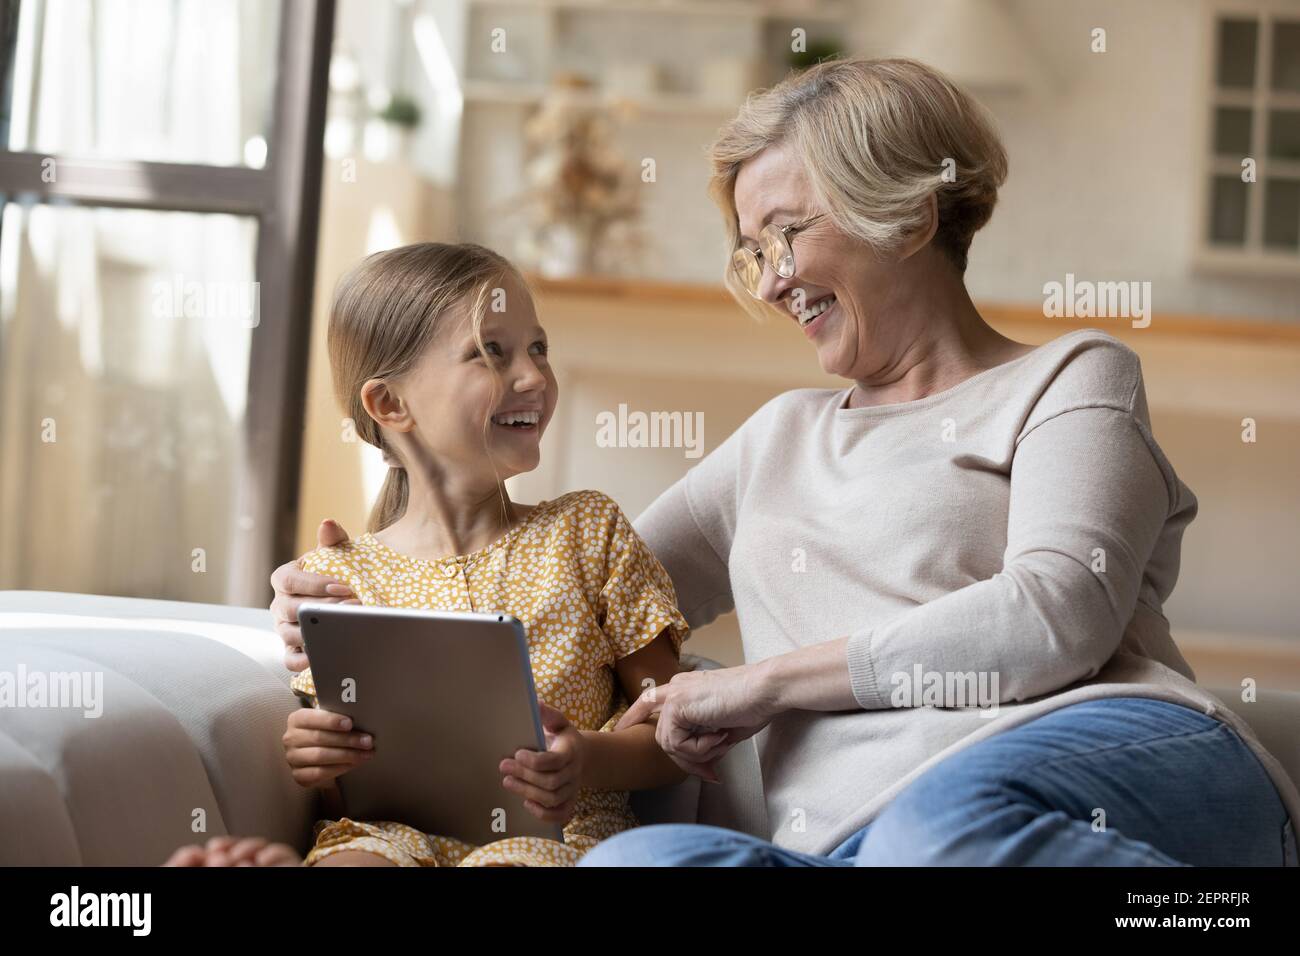 Laughing grandma hug small granddaughter discuss funny photo on pad Stock Photo